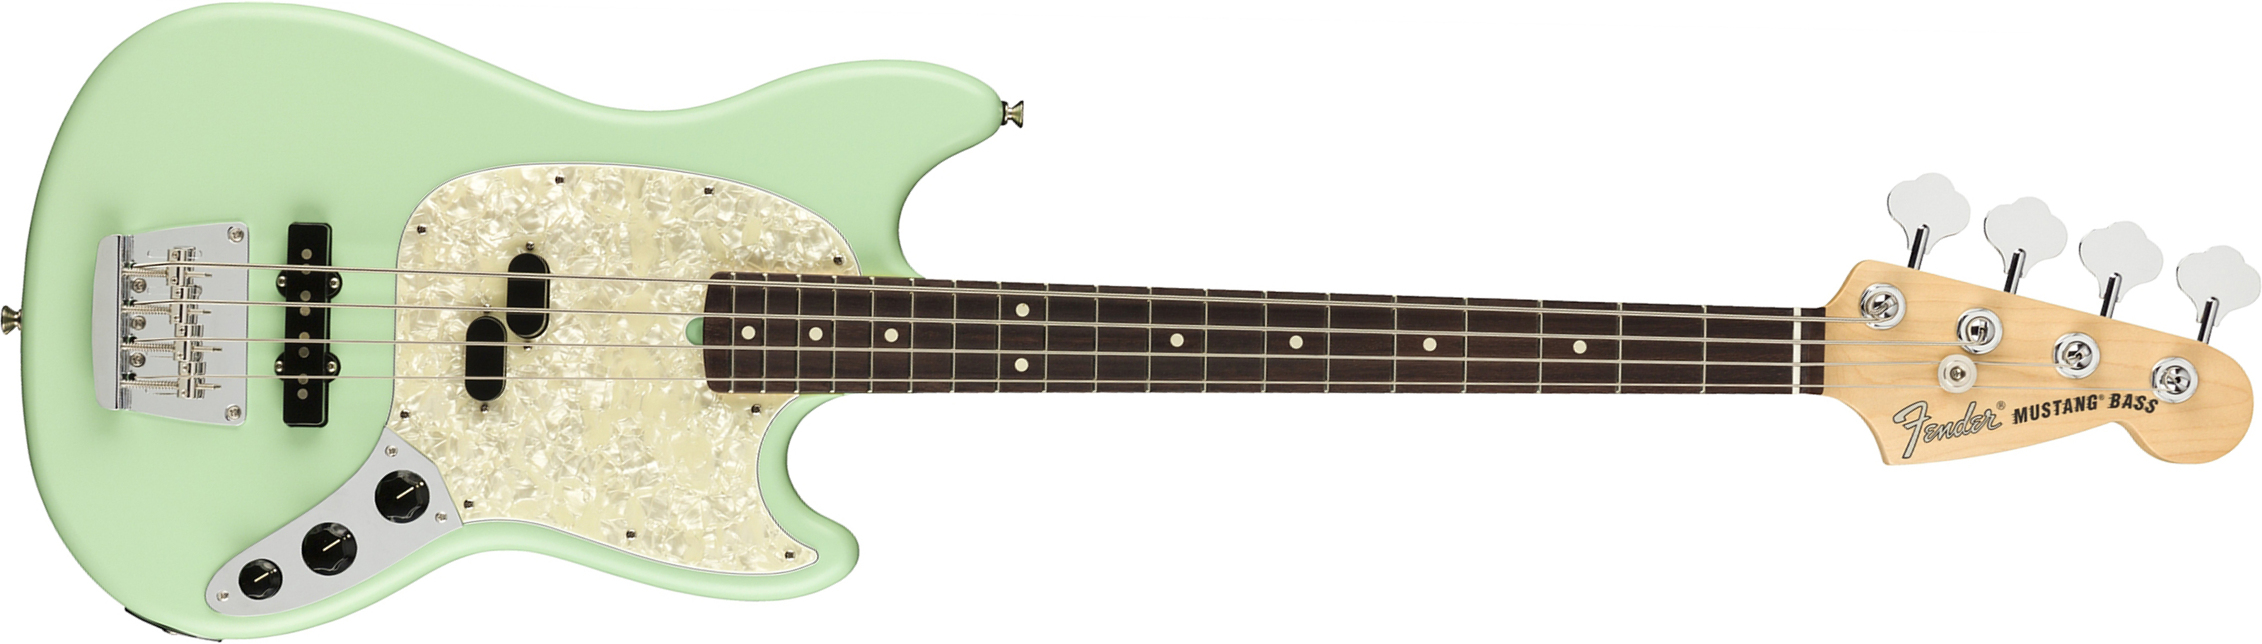 Fender Mustang Bass American Performer Usa Rw - Satin Surf Green - Bajo eléctrico para niños - Main picture